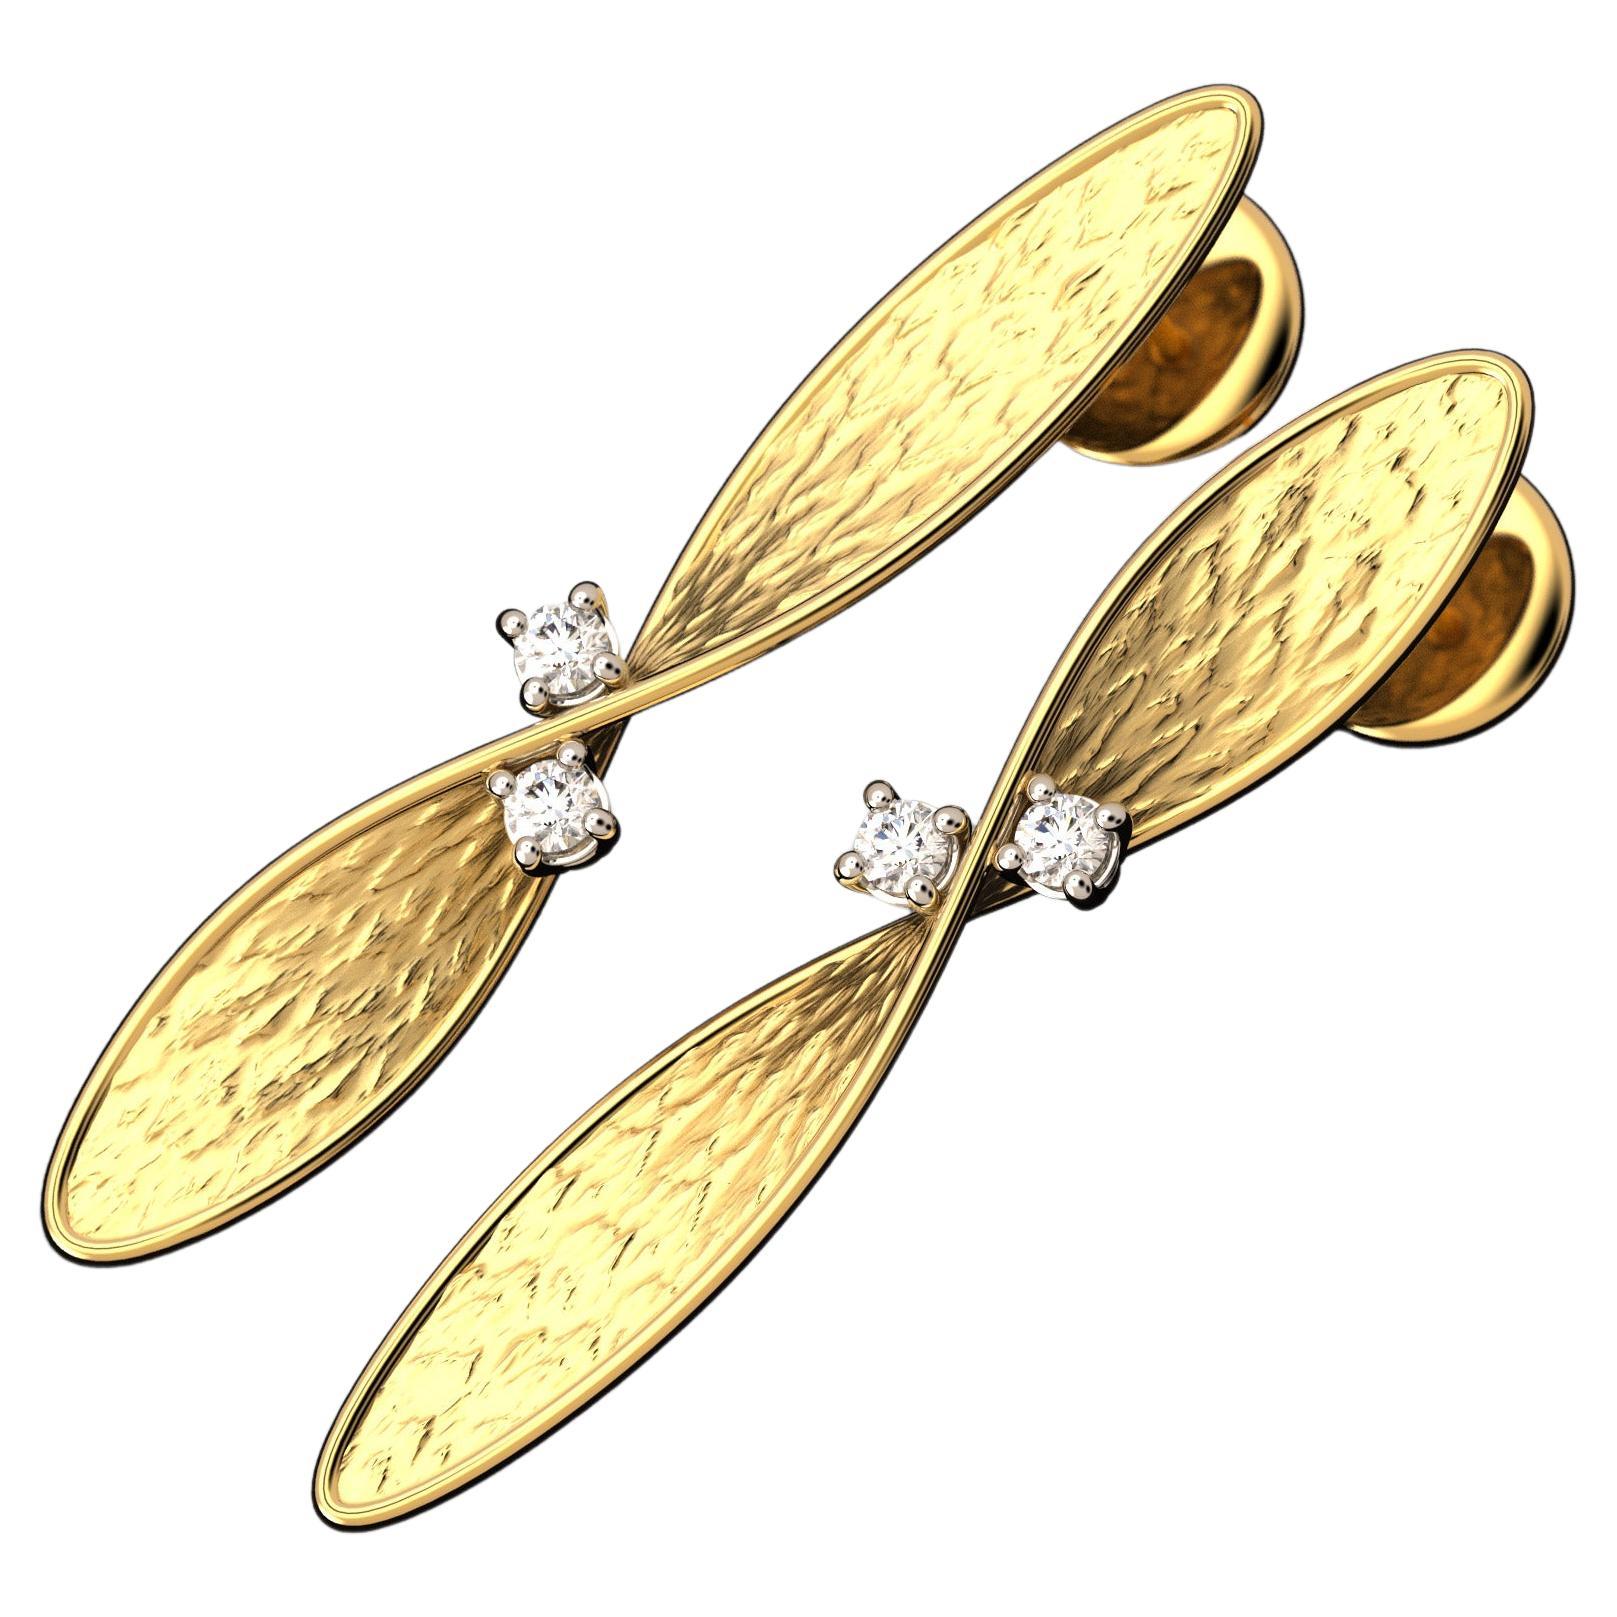 Oltremare Gioielli, Italian Jewelry, 14k Gold Diamond Earrings Made in Italy